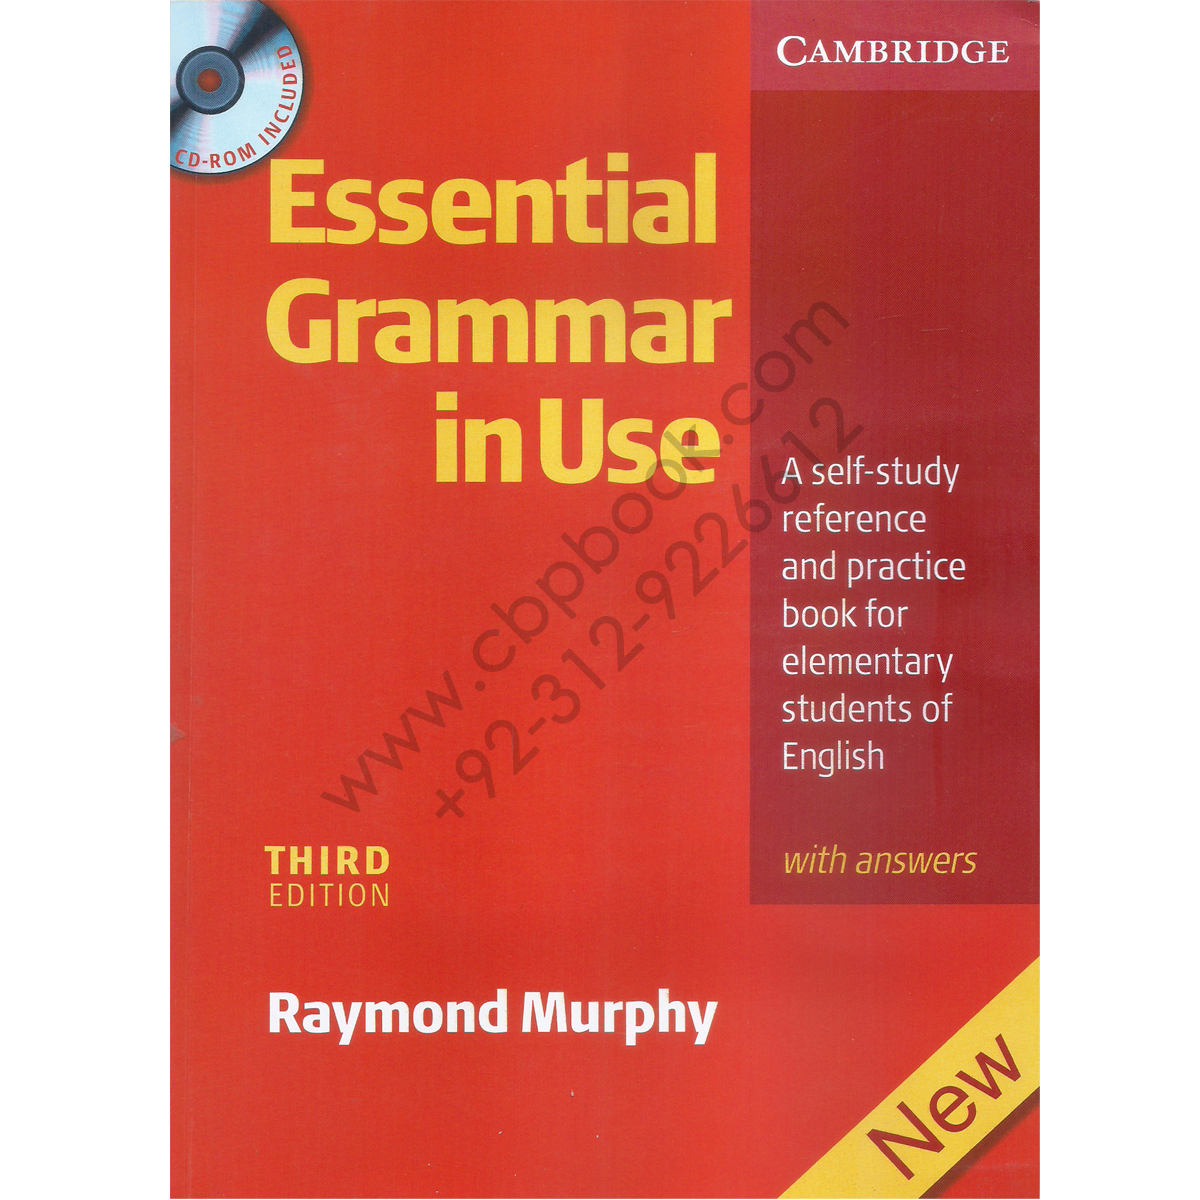 Essential English Grammar By Raymond Murphy